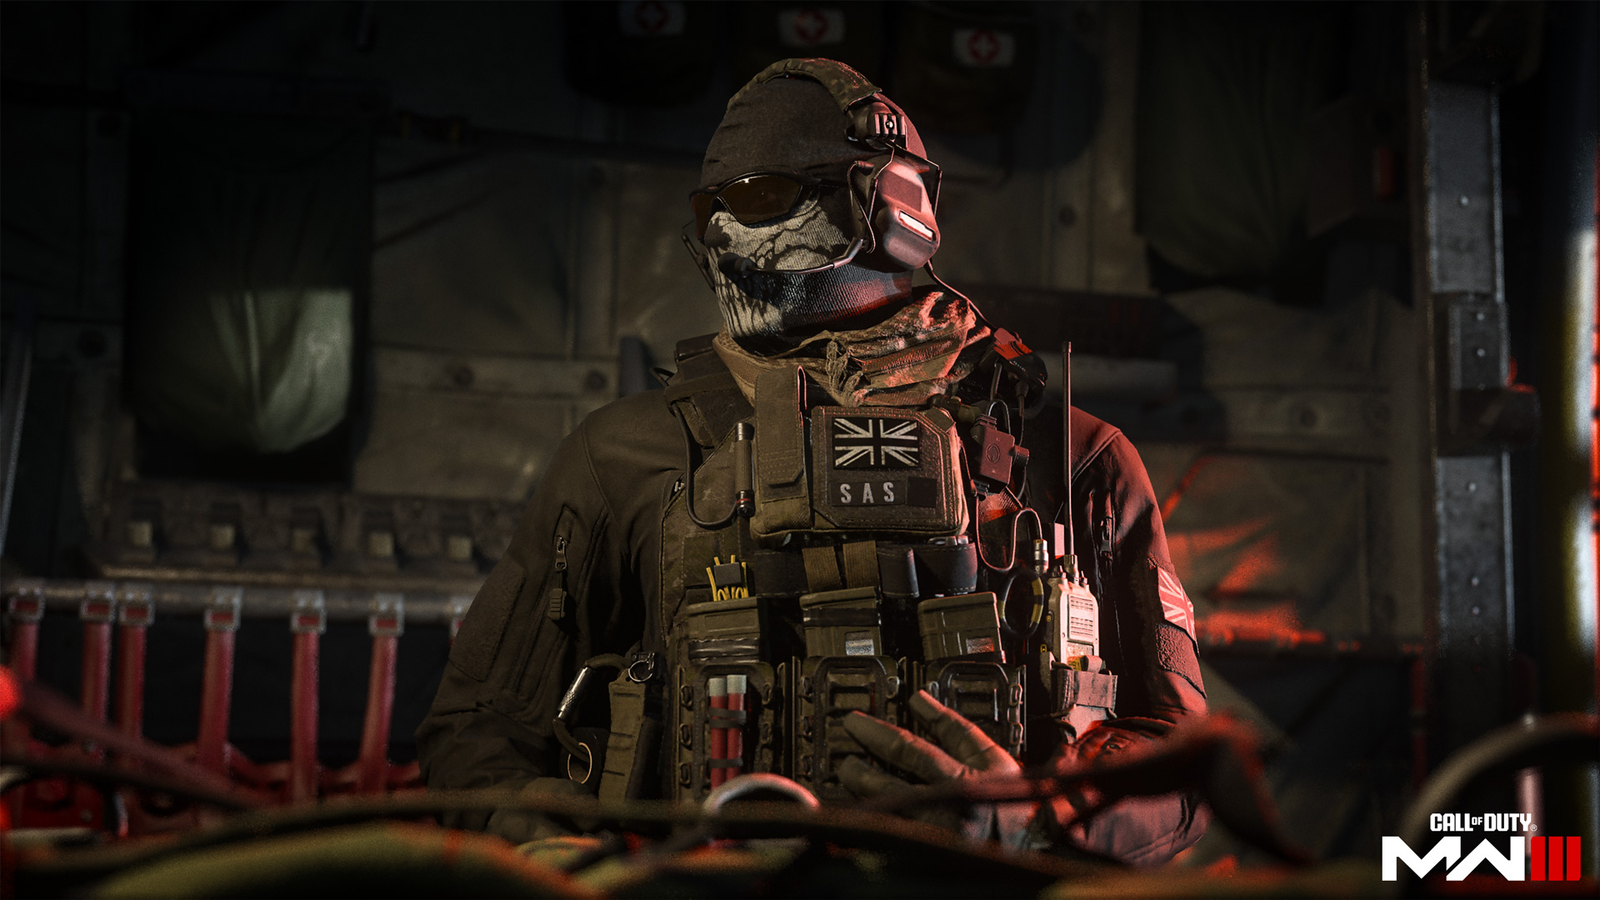 Call of Duty: Warzone News on X: The Modern Warfare 3 Trailer